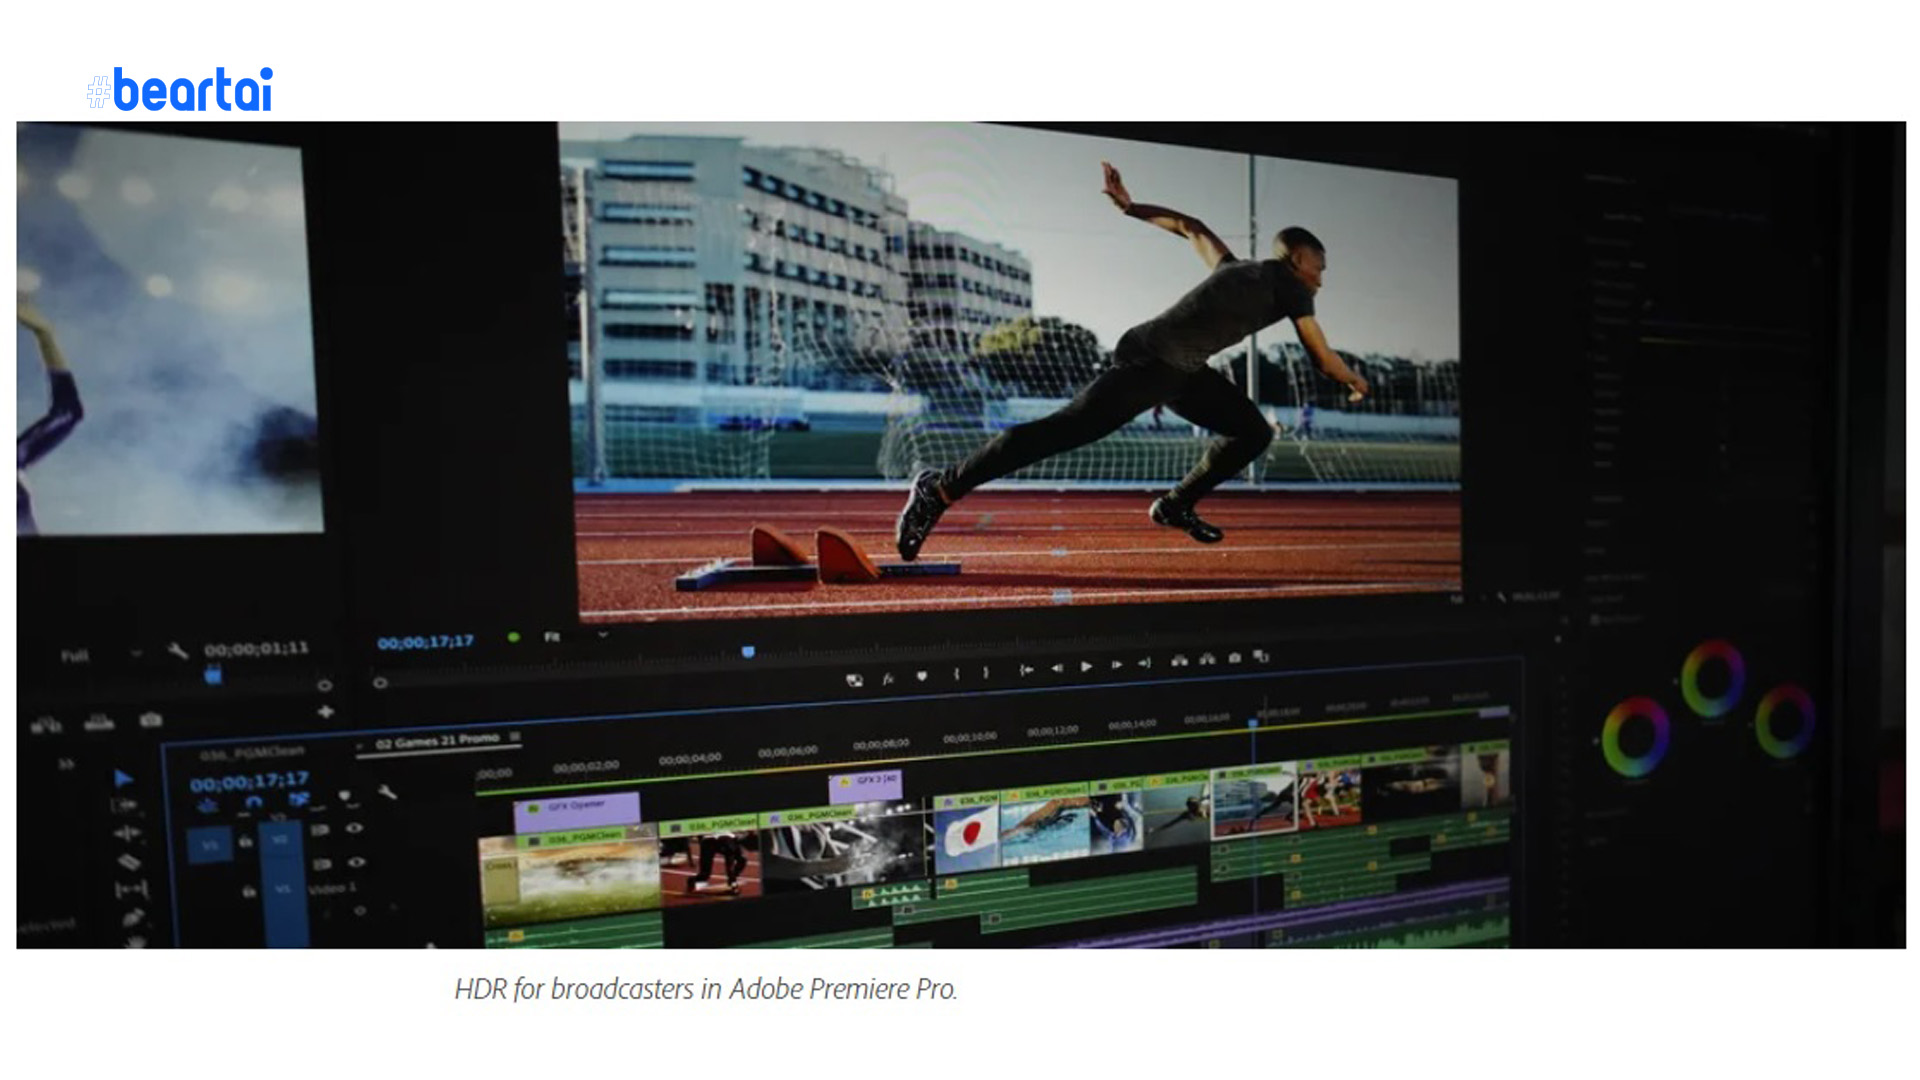 Adobe CC โชว์ของที่งาน IBC นำเสนออัปเดตฟีเจอร์ล่าสุดของ Adobe Premiere Pro เพิ่มความคล่องตัวให้ฟิล์มเมกเกอร์